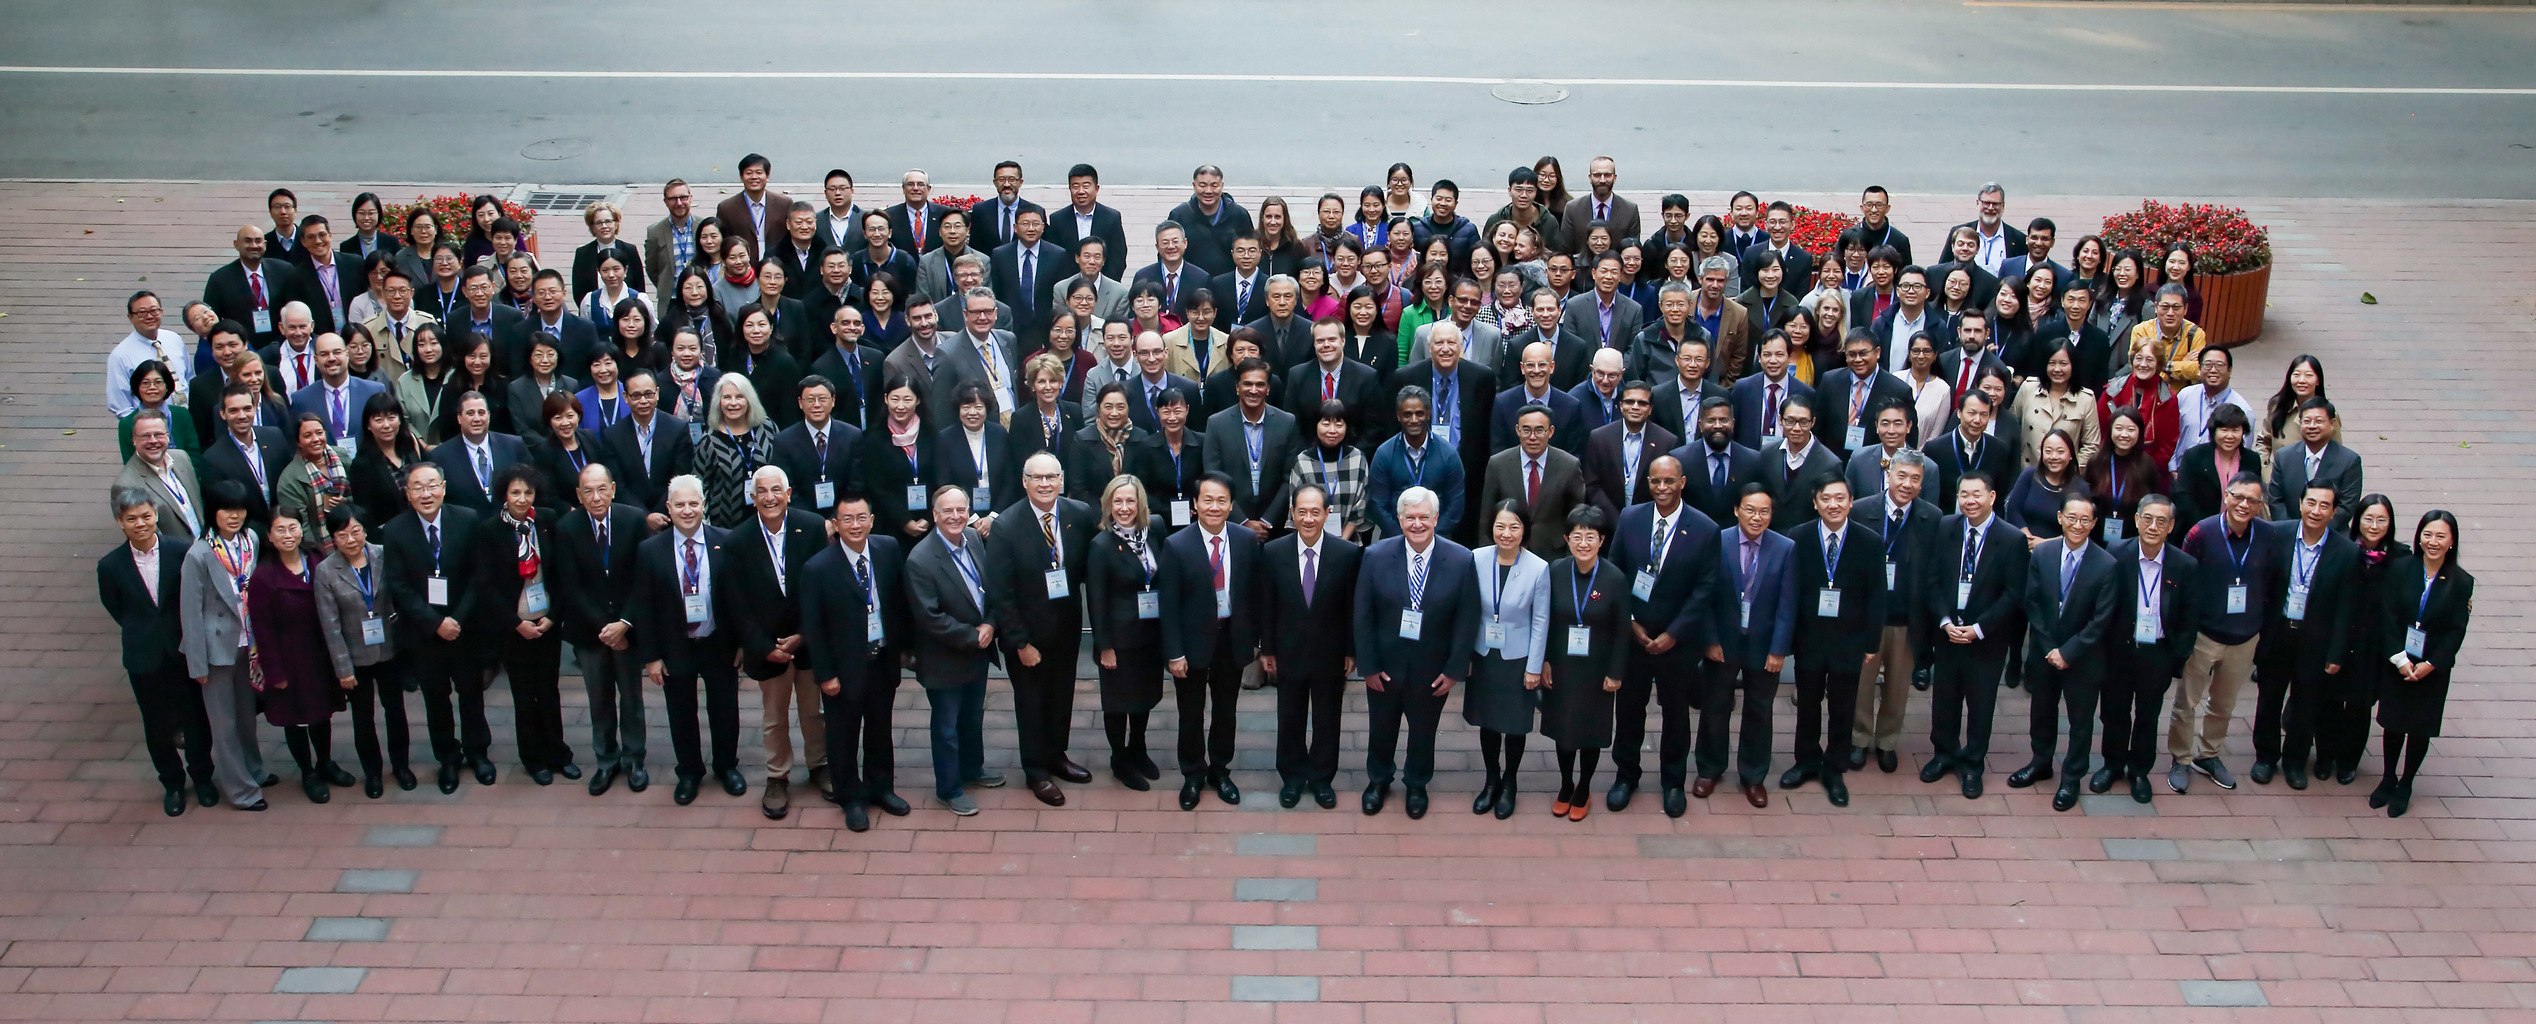 2019 JI Symposium Group Picture